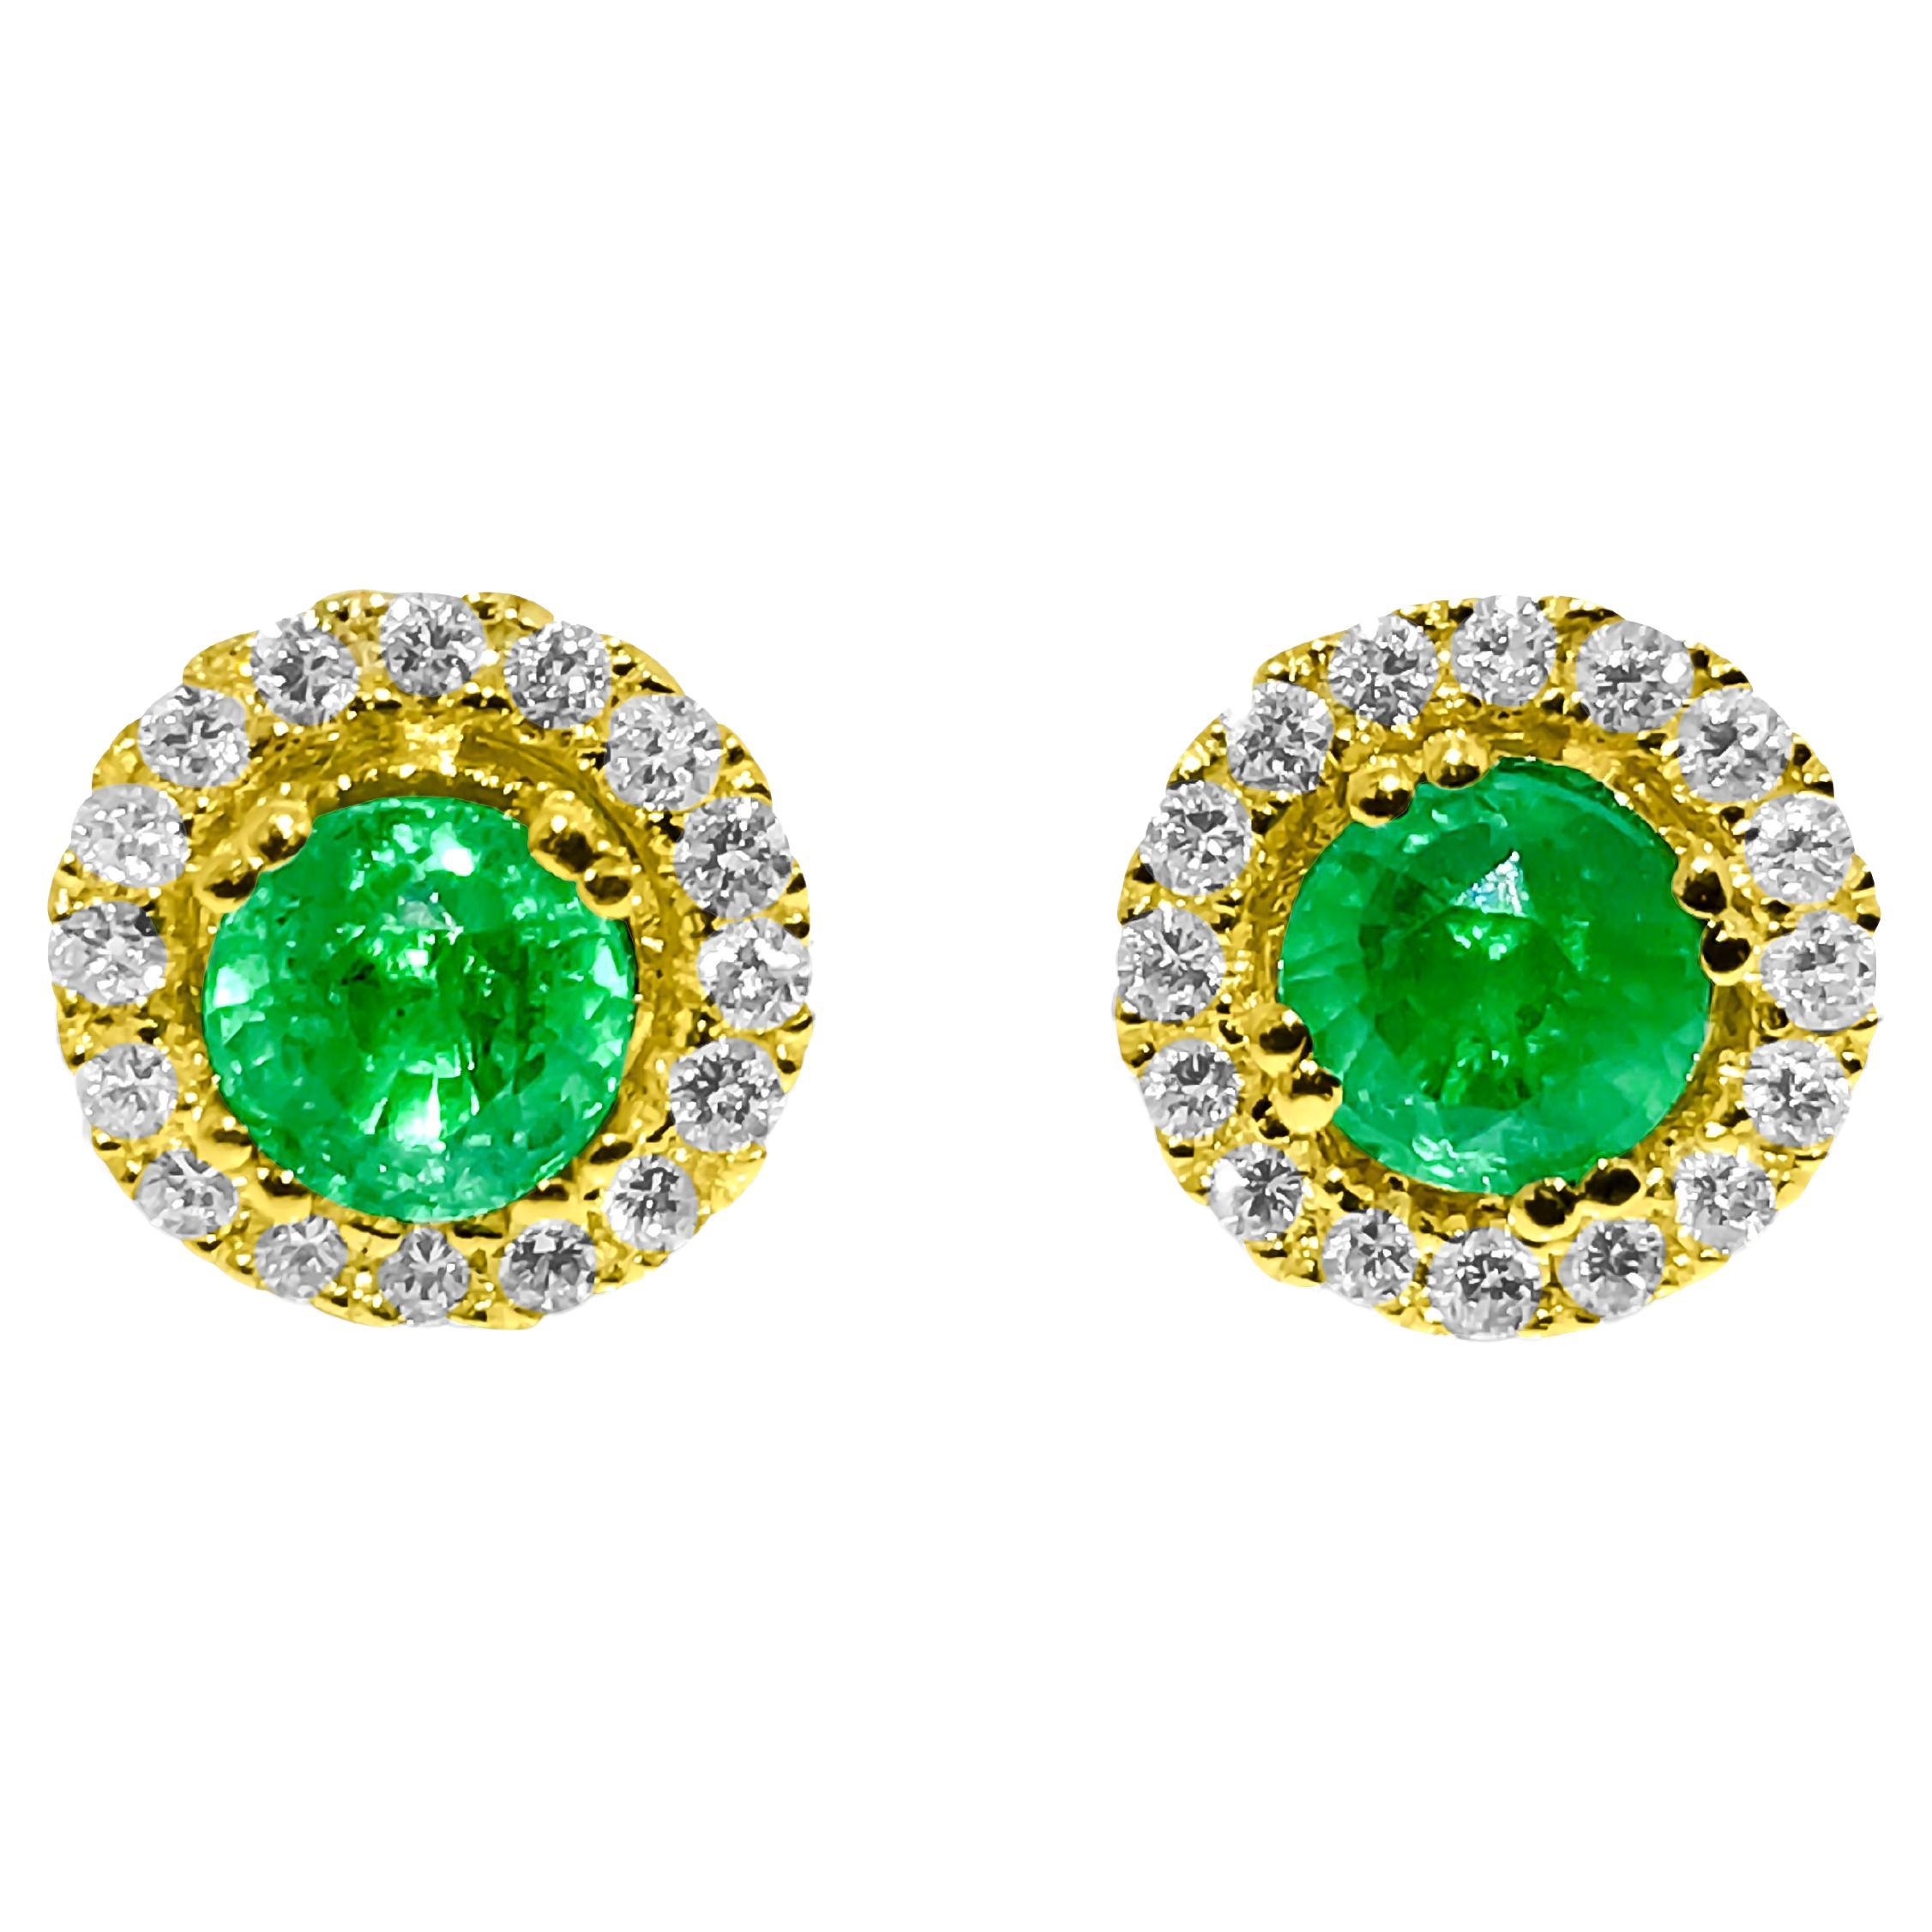 2.90 Carat Emerald & G color Diamond Studs in 14K Gold